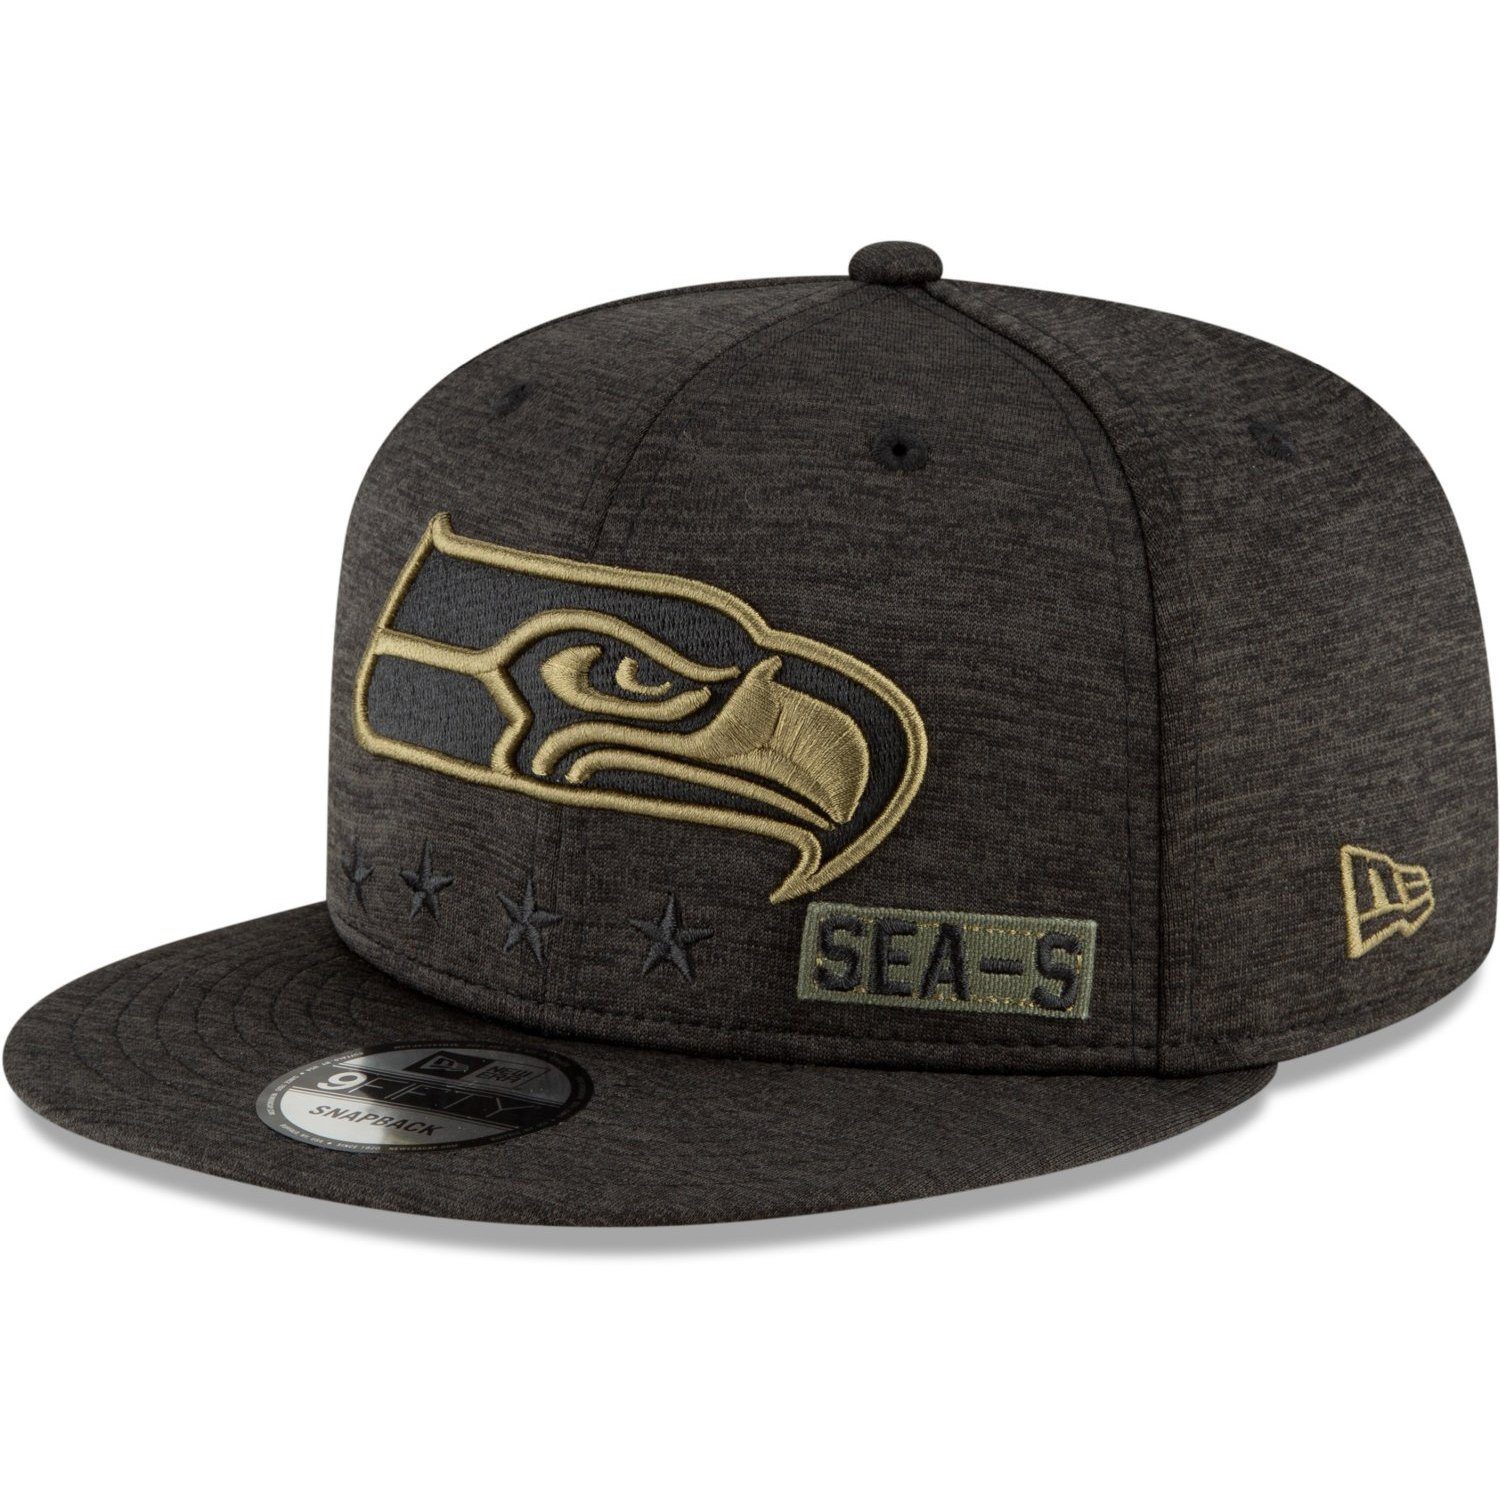 New Era Snapback Cap 9FIFTY Salute to Service San Francisco NFL 2020 Seattle Seahawks